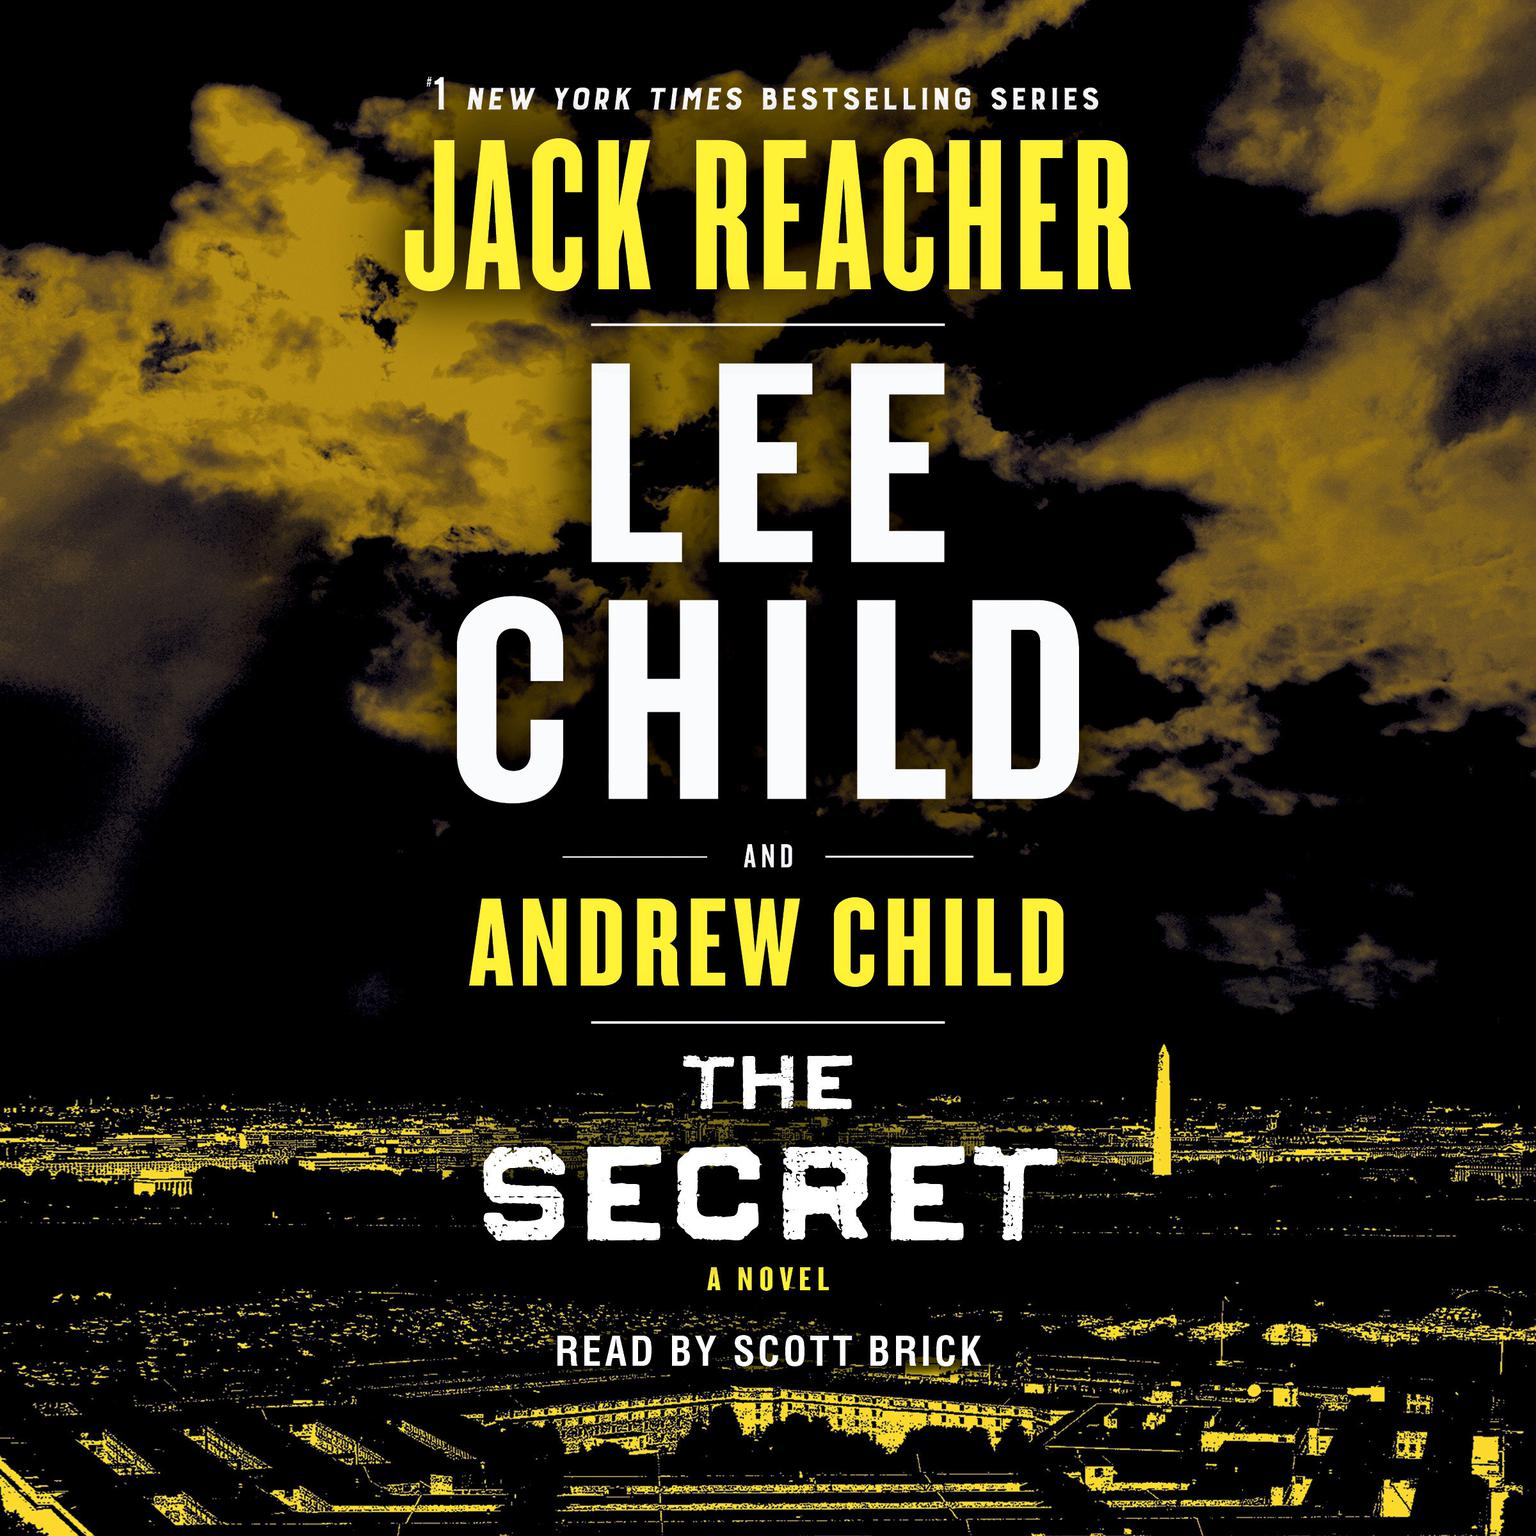 The Secret: A Jack Reacher Novel Audiobook, by Lee Child